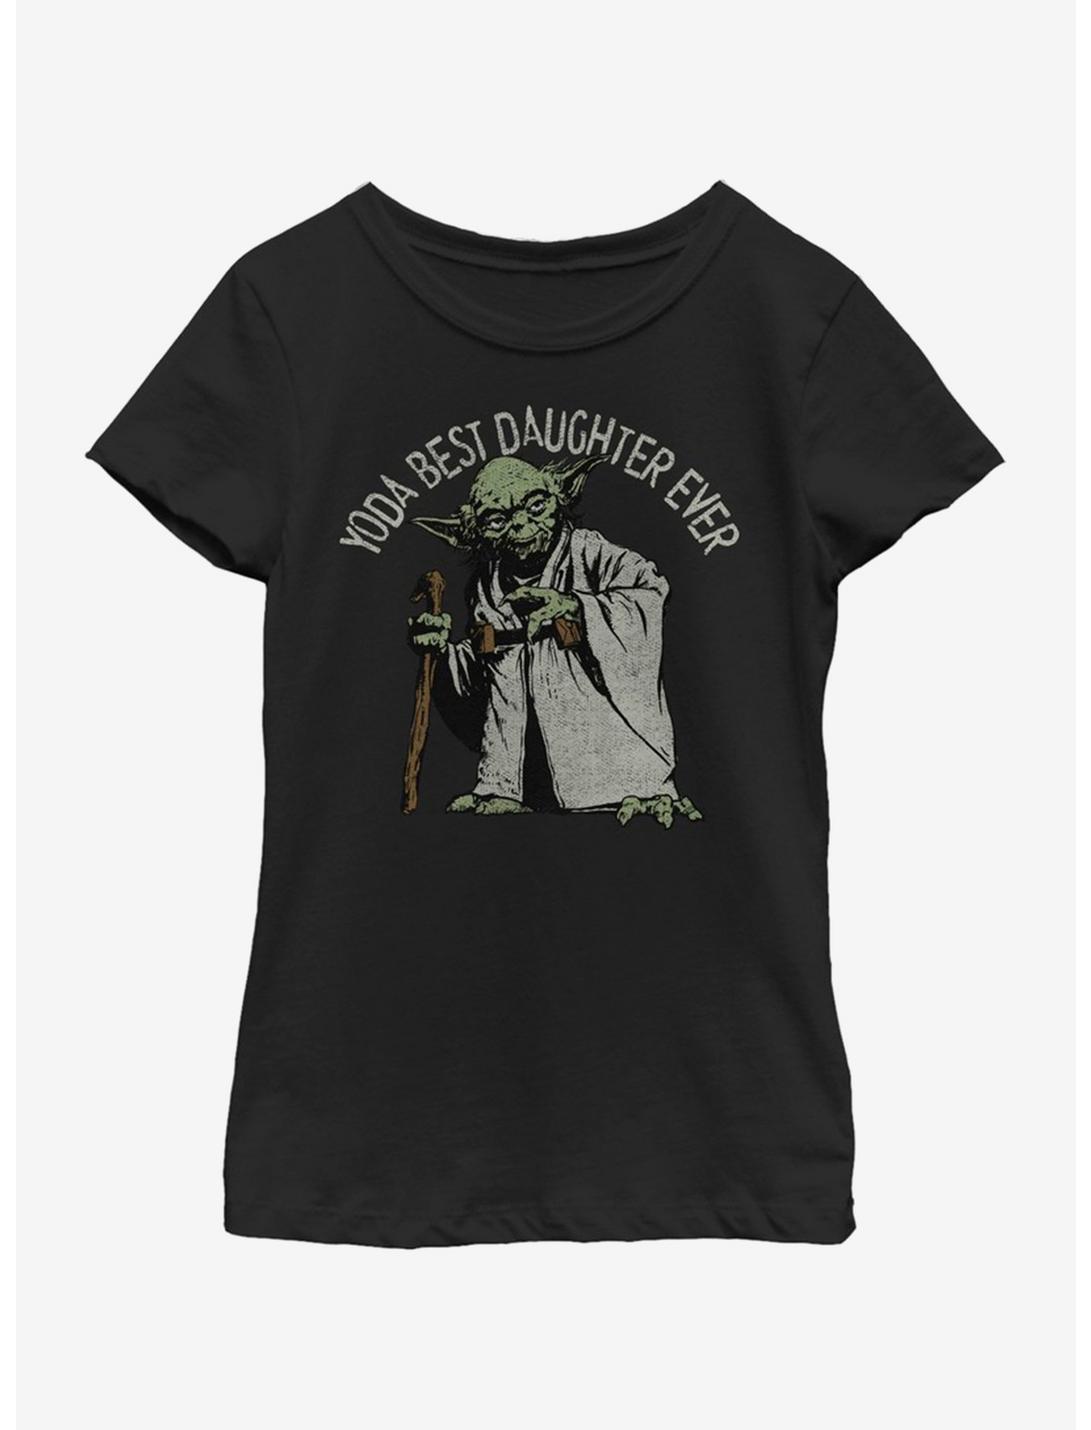 Star Wars Green Daughter Youth Girls T-Shirt, BLACK, hi-res